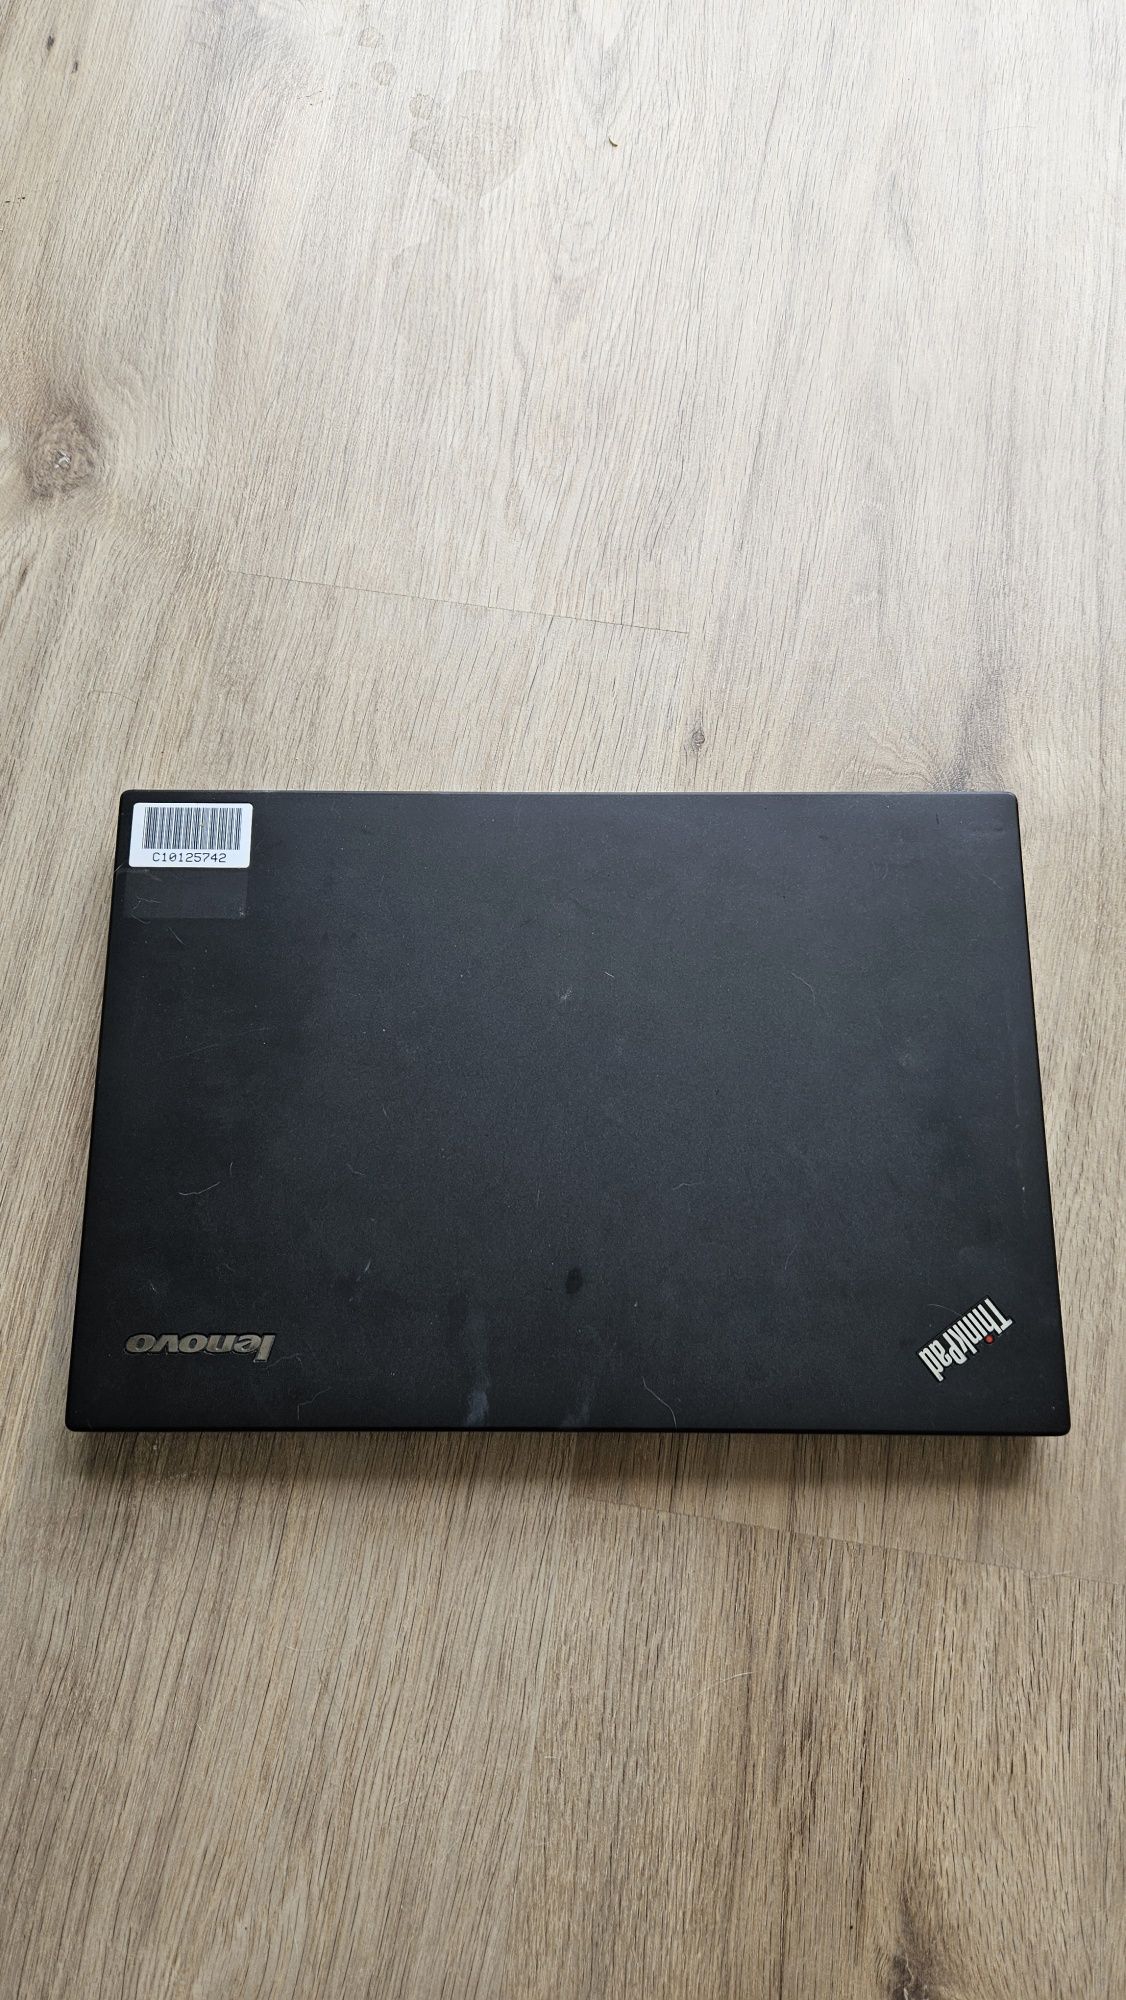 Lenovo T440 Laptop (ThinkPad) - Type 20B7